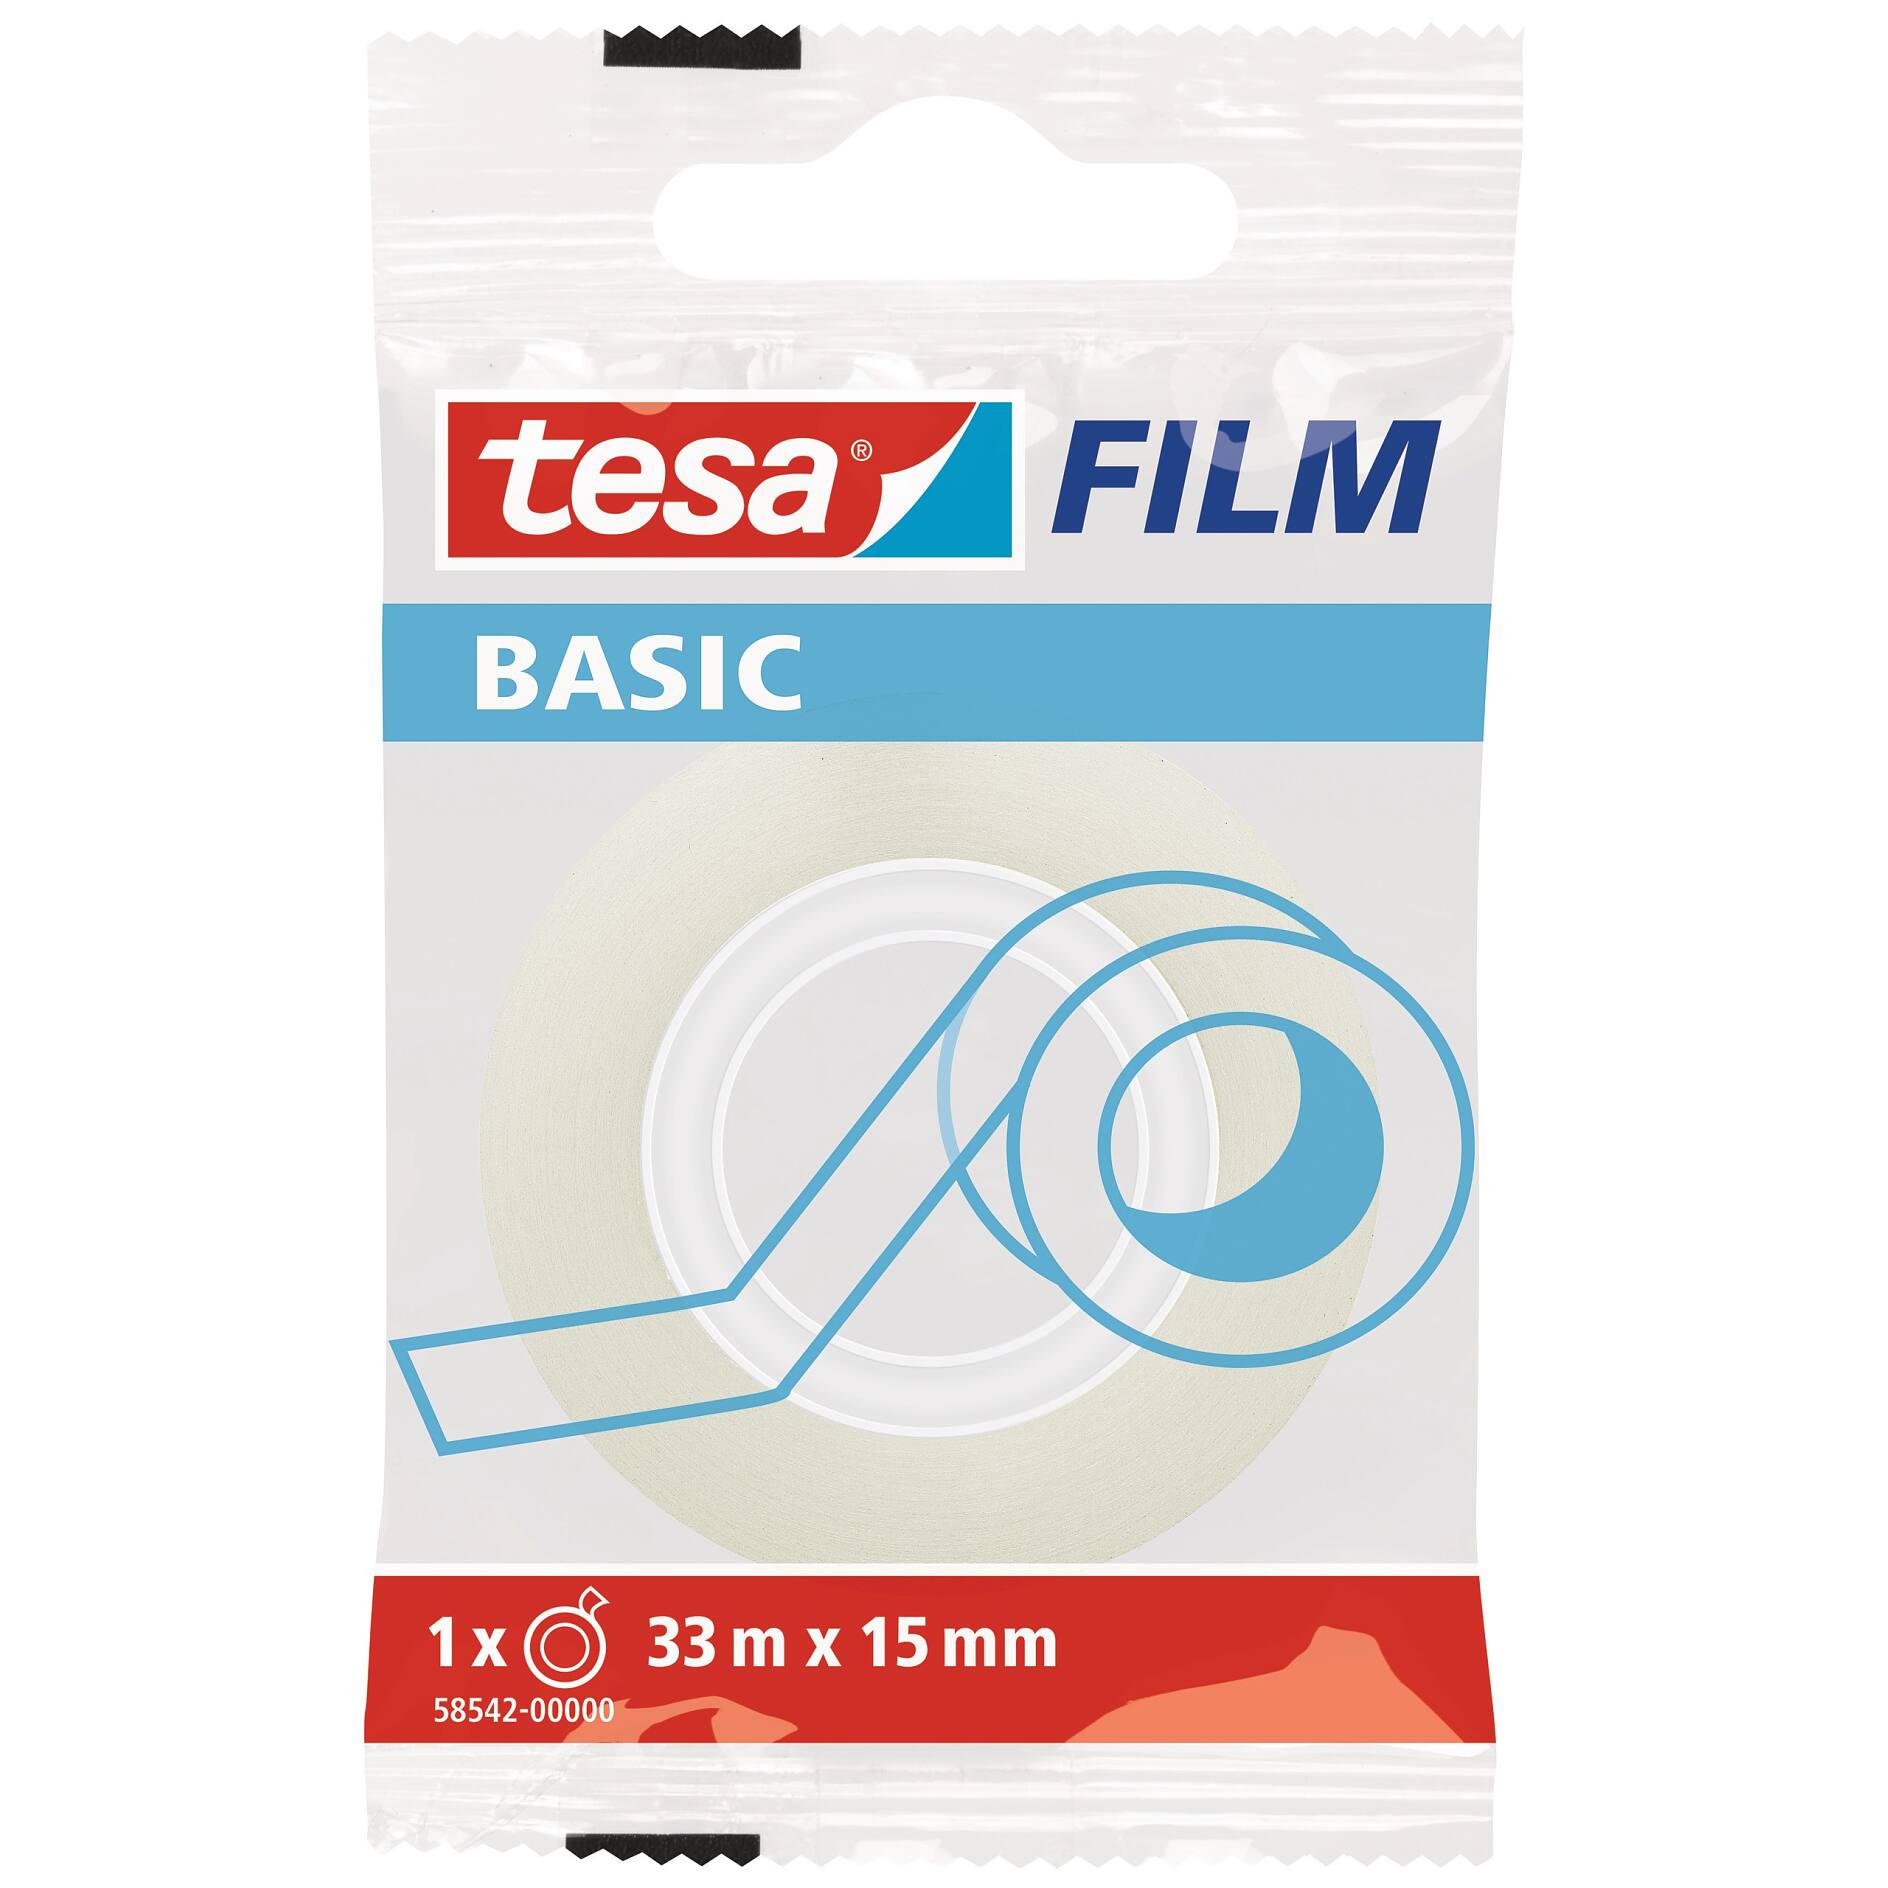 Tesa Film survitrage tesa Moll Thermo Cover 1,5mx4m transparent